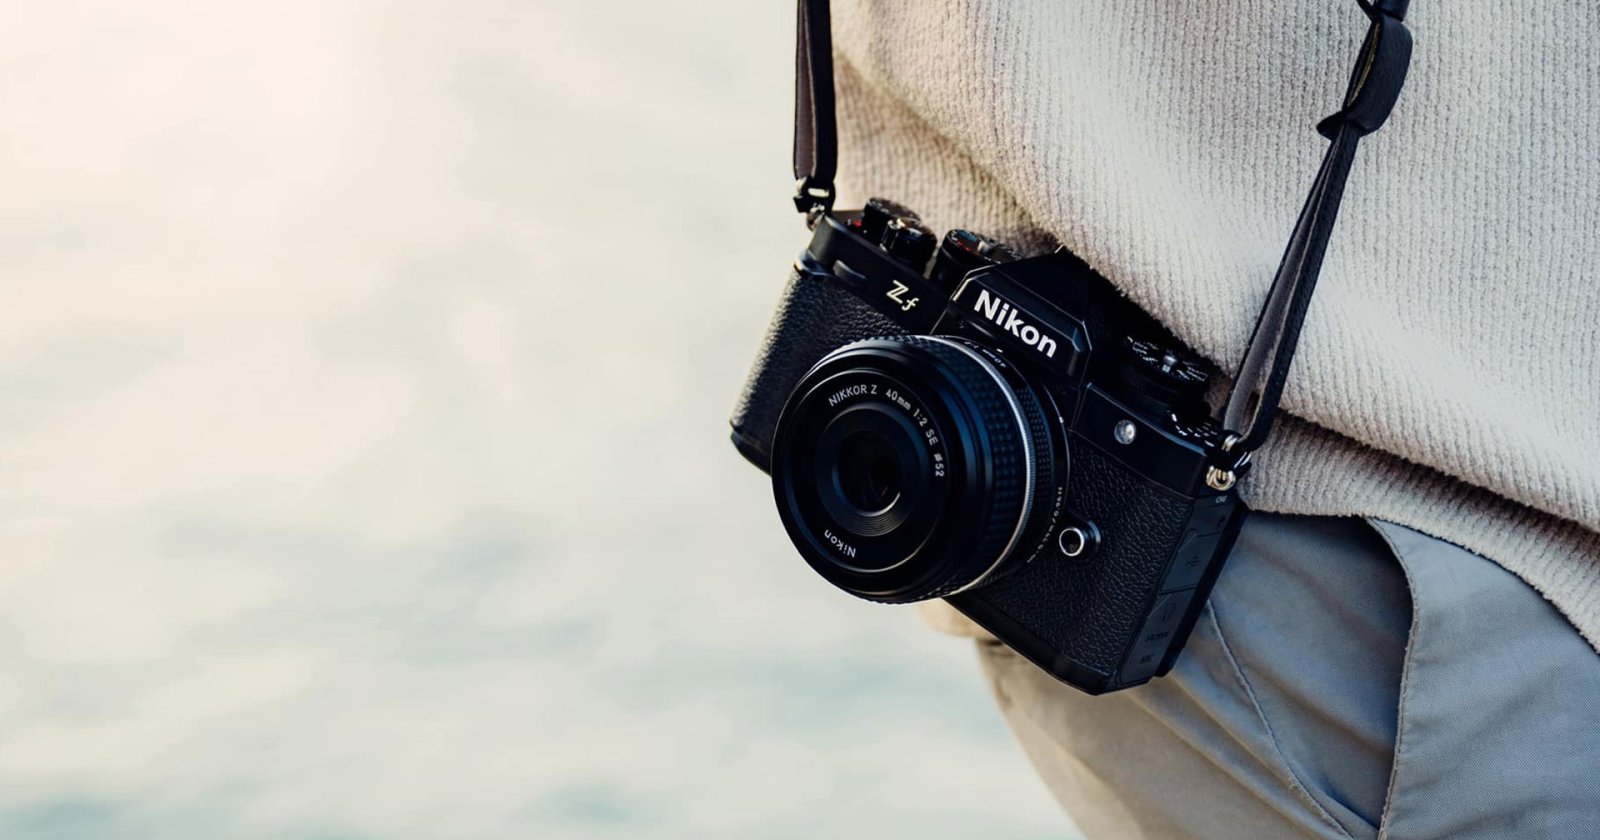 Nikon Z f กล้องดีไซน์หล่อ คว้าแชมป์ขายดีอันดับ 1   ร้านดัง Map Camera ในญี่ปุ่น